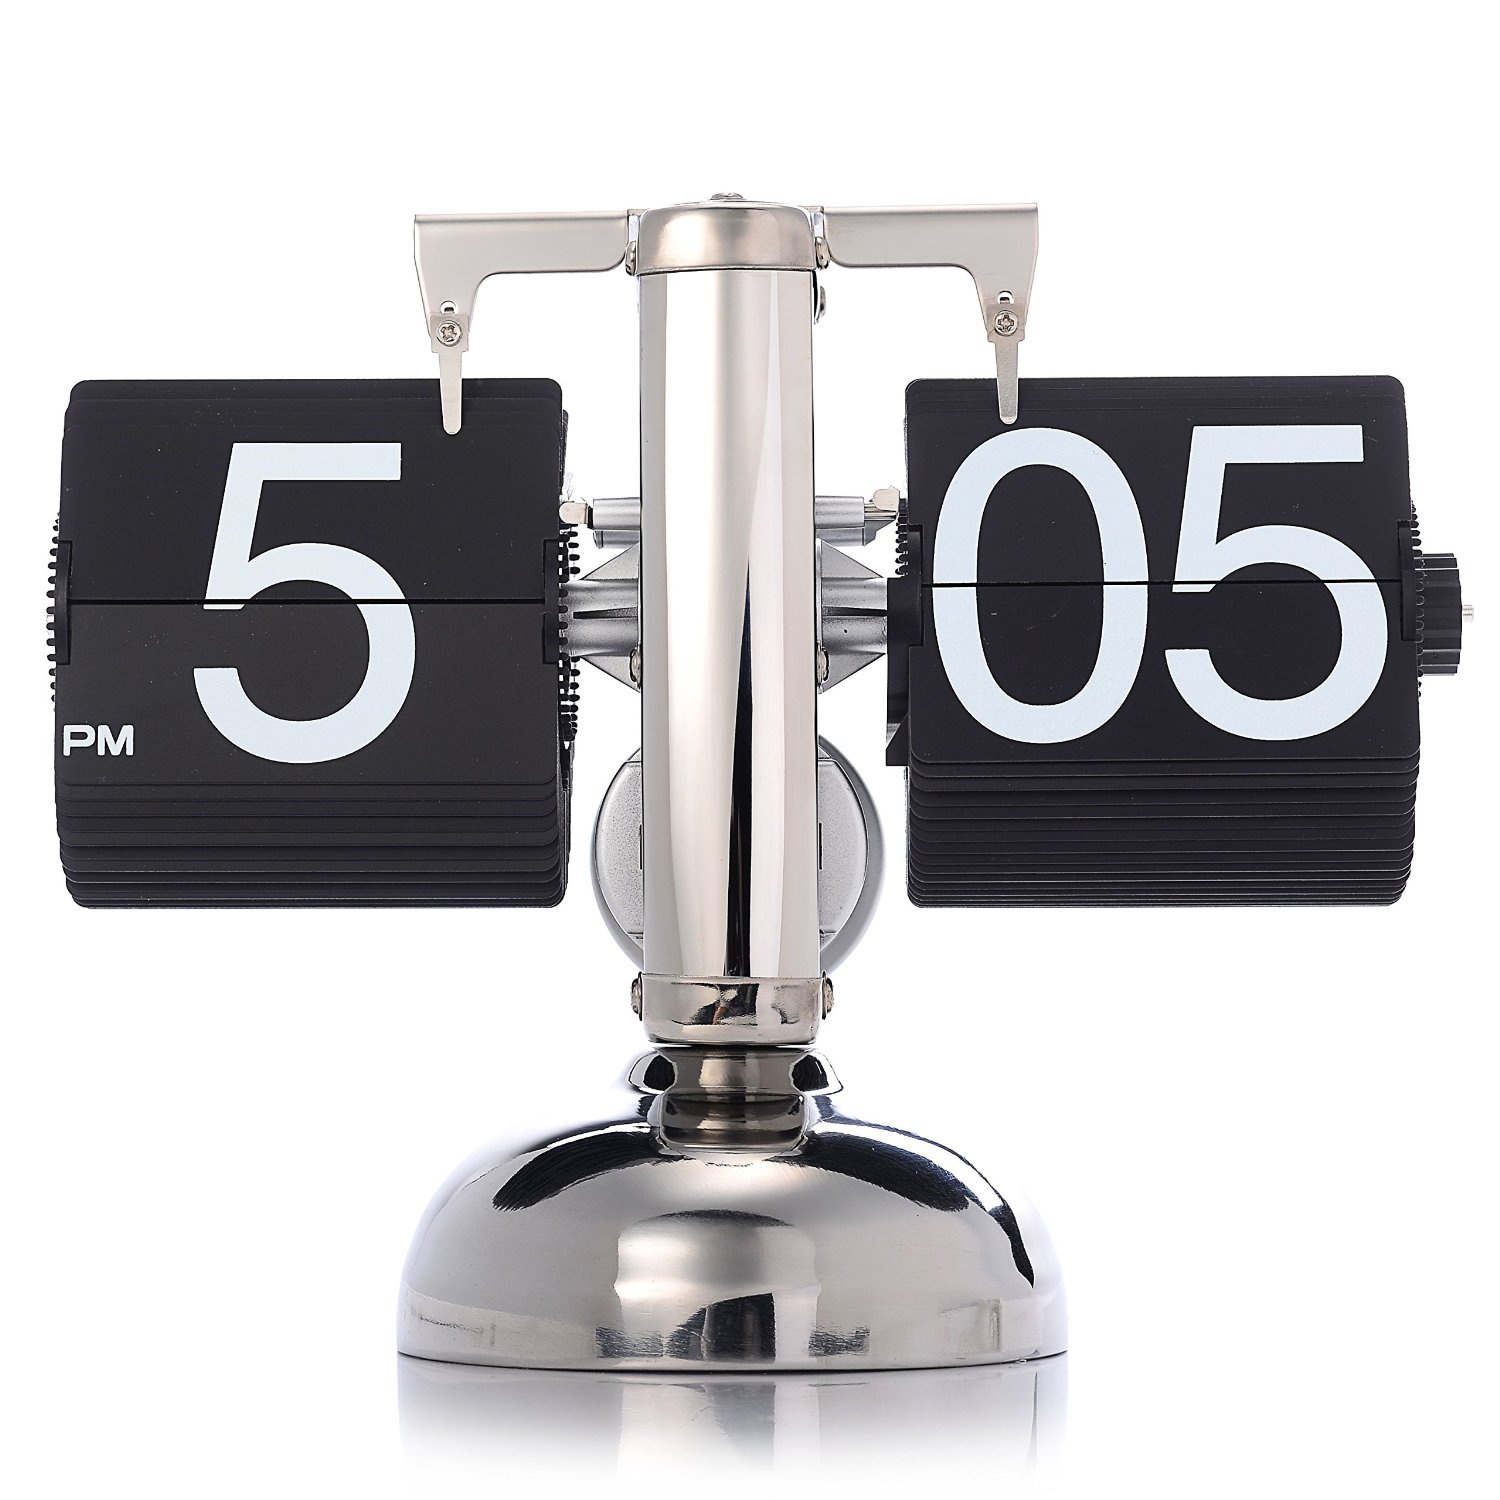 KABB's retro-style flip-down clock. ($44)